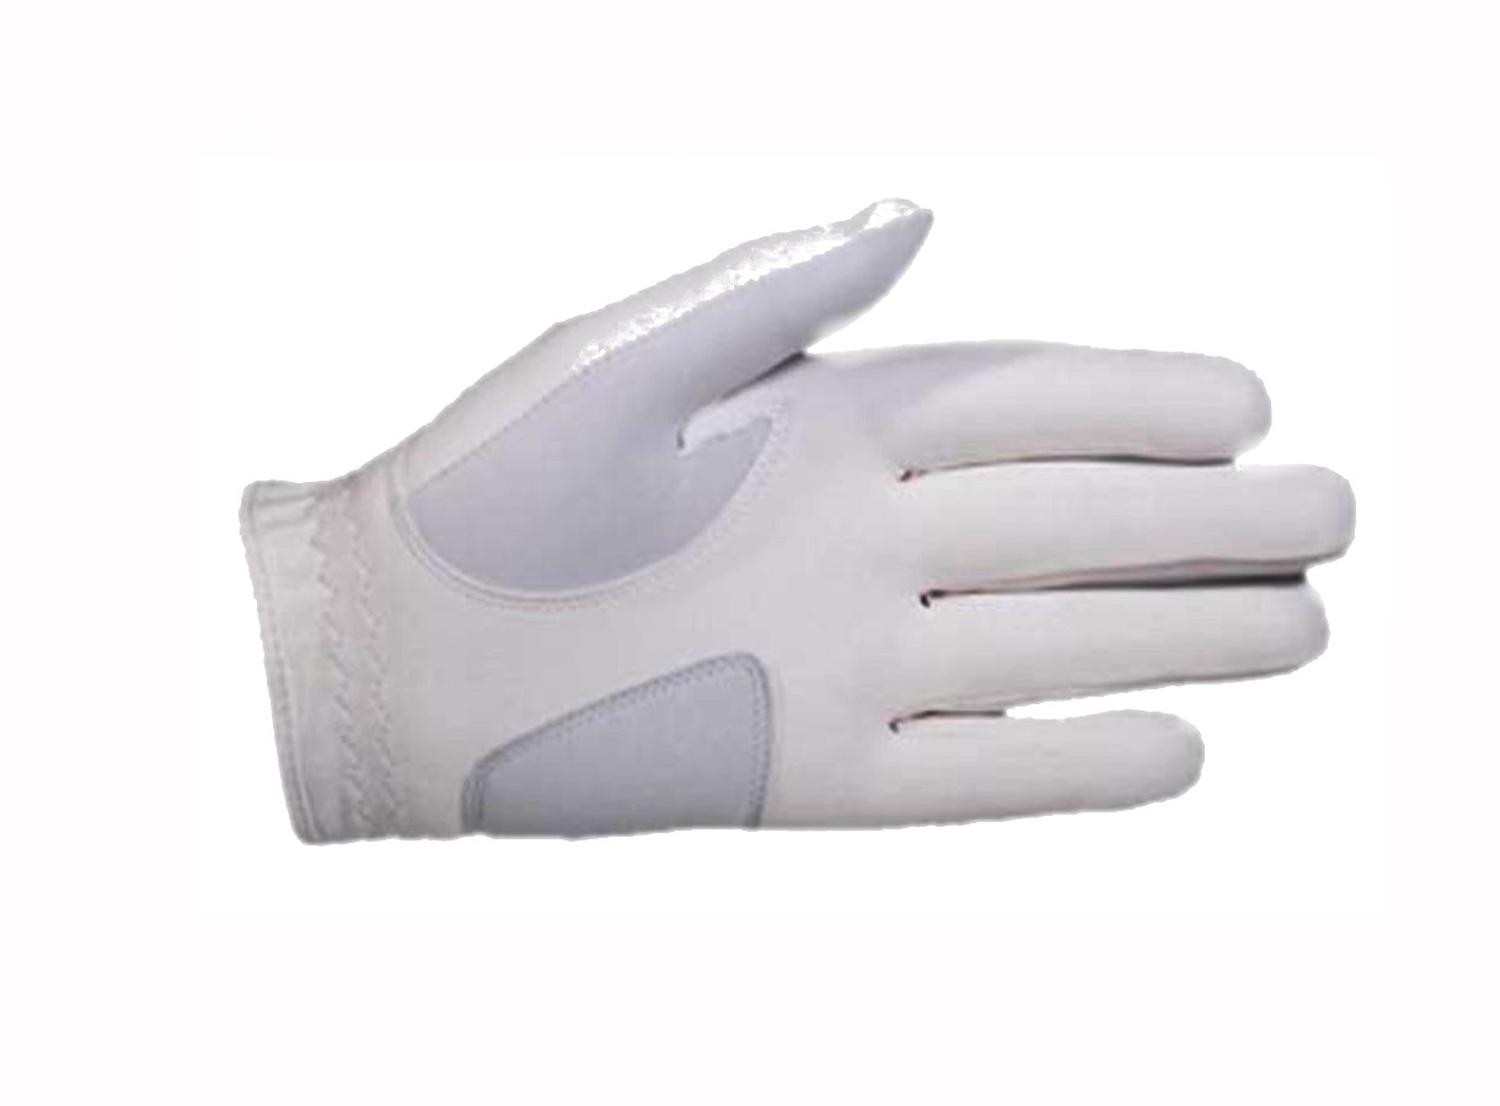 Bridgestone Golf Lady Glove